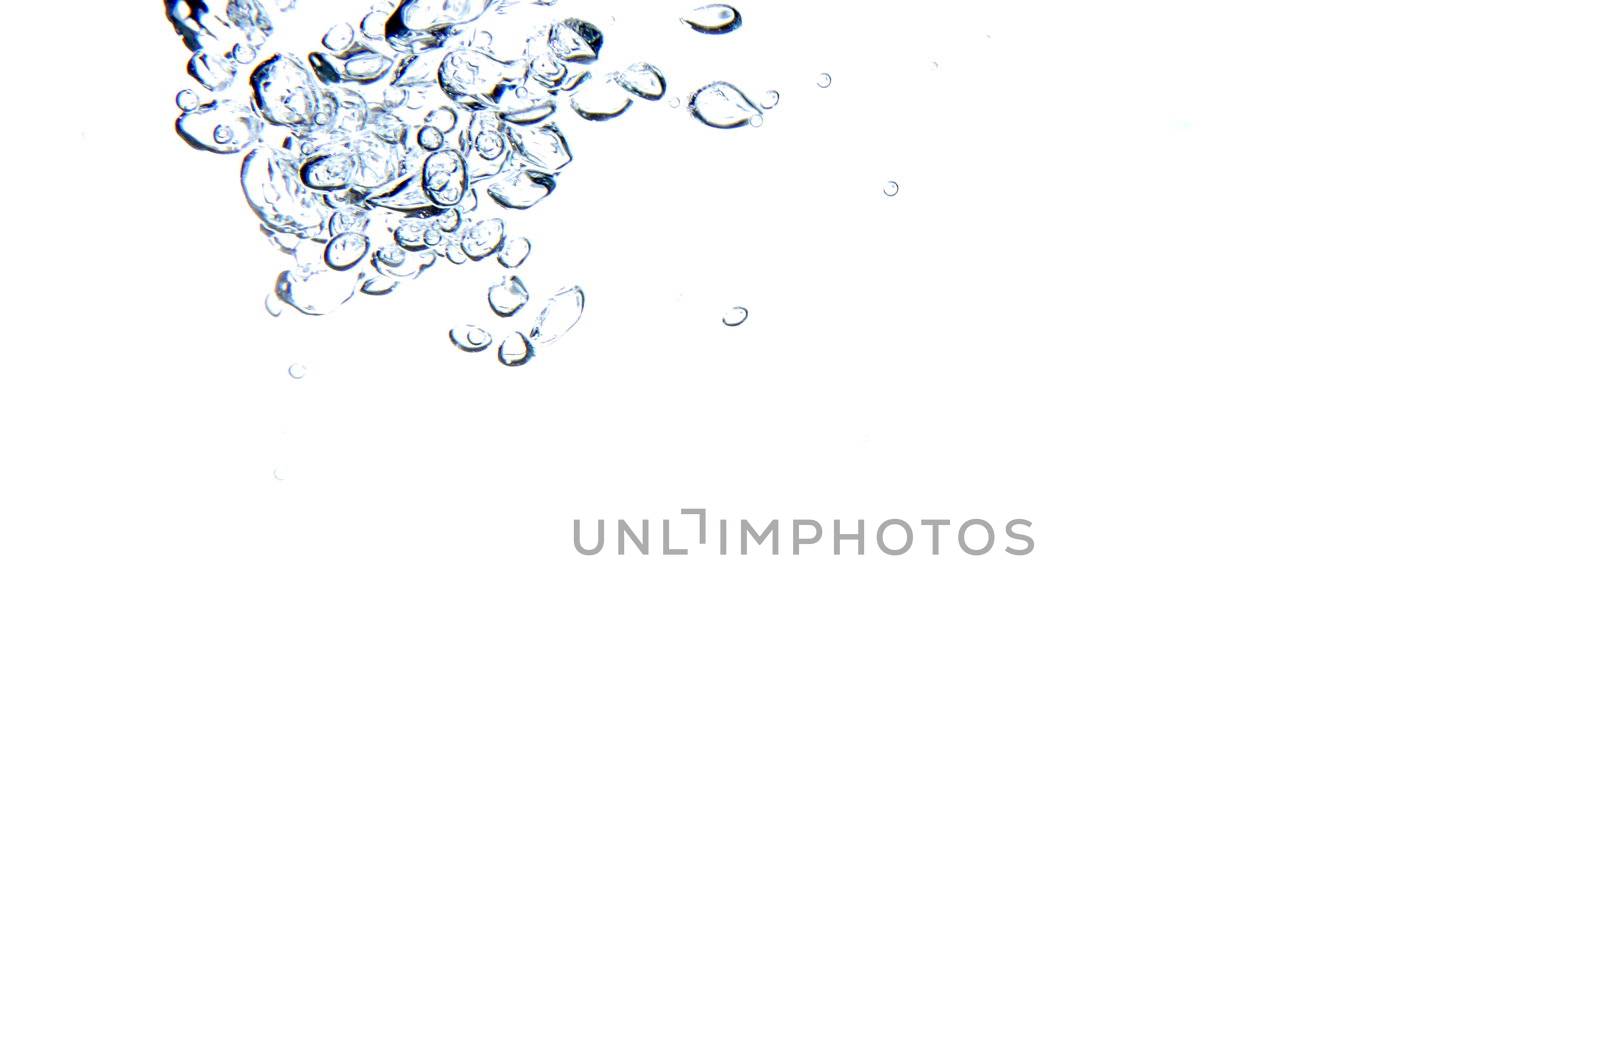 air bubbles in water by gunnar3000